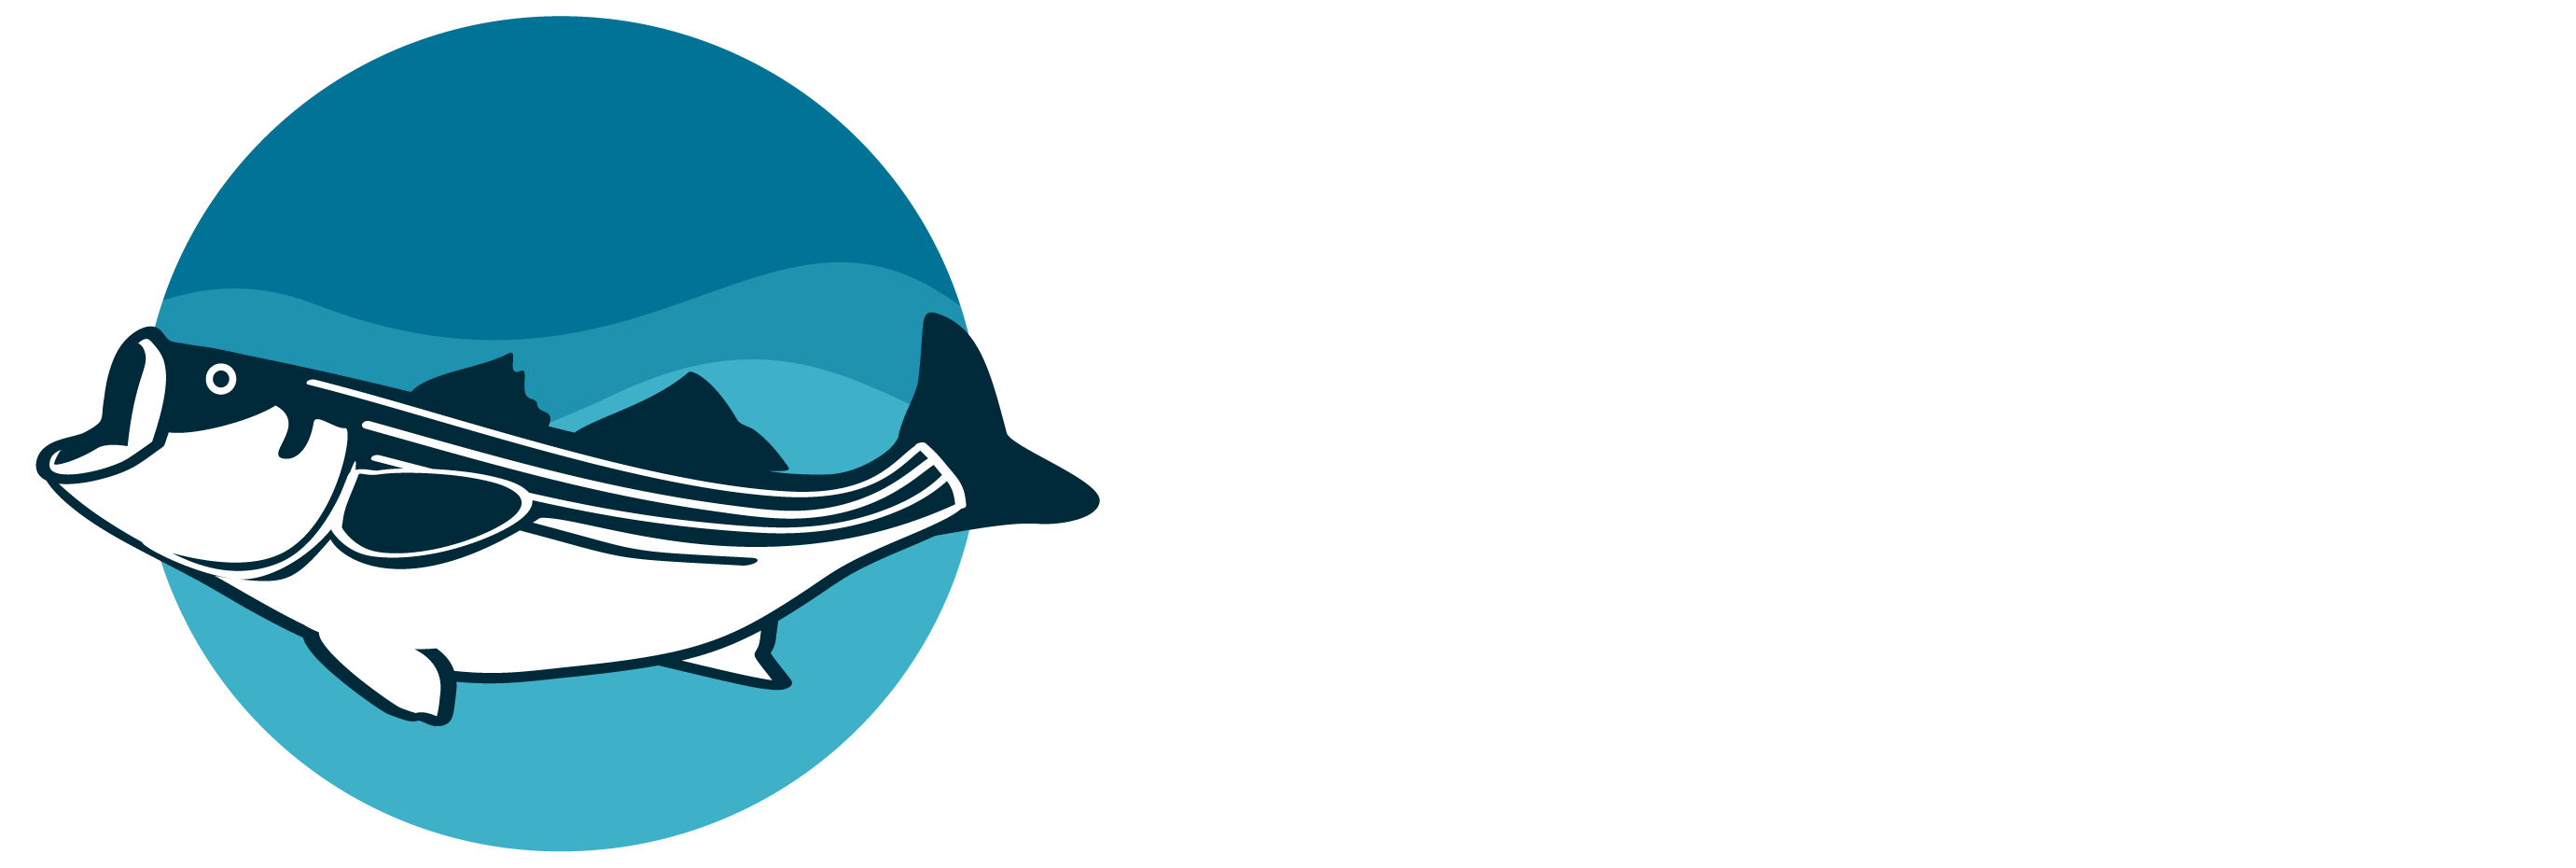 Striped Bass Magic